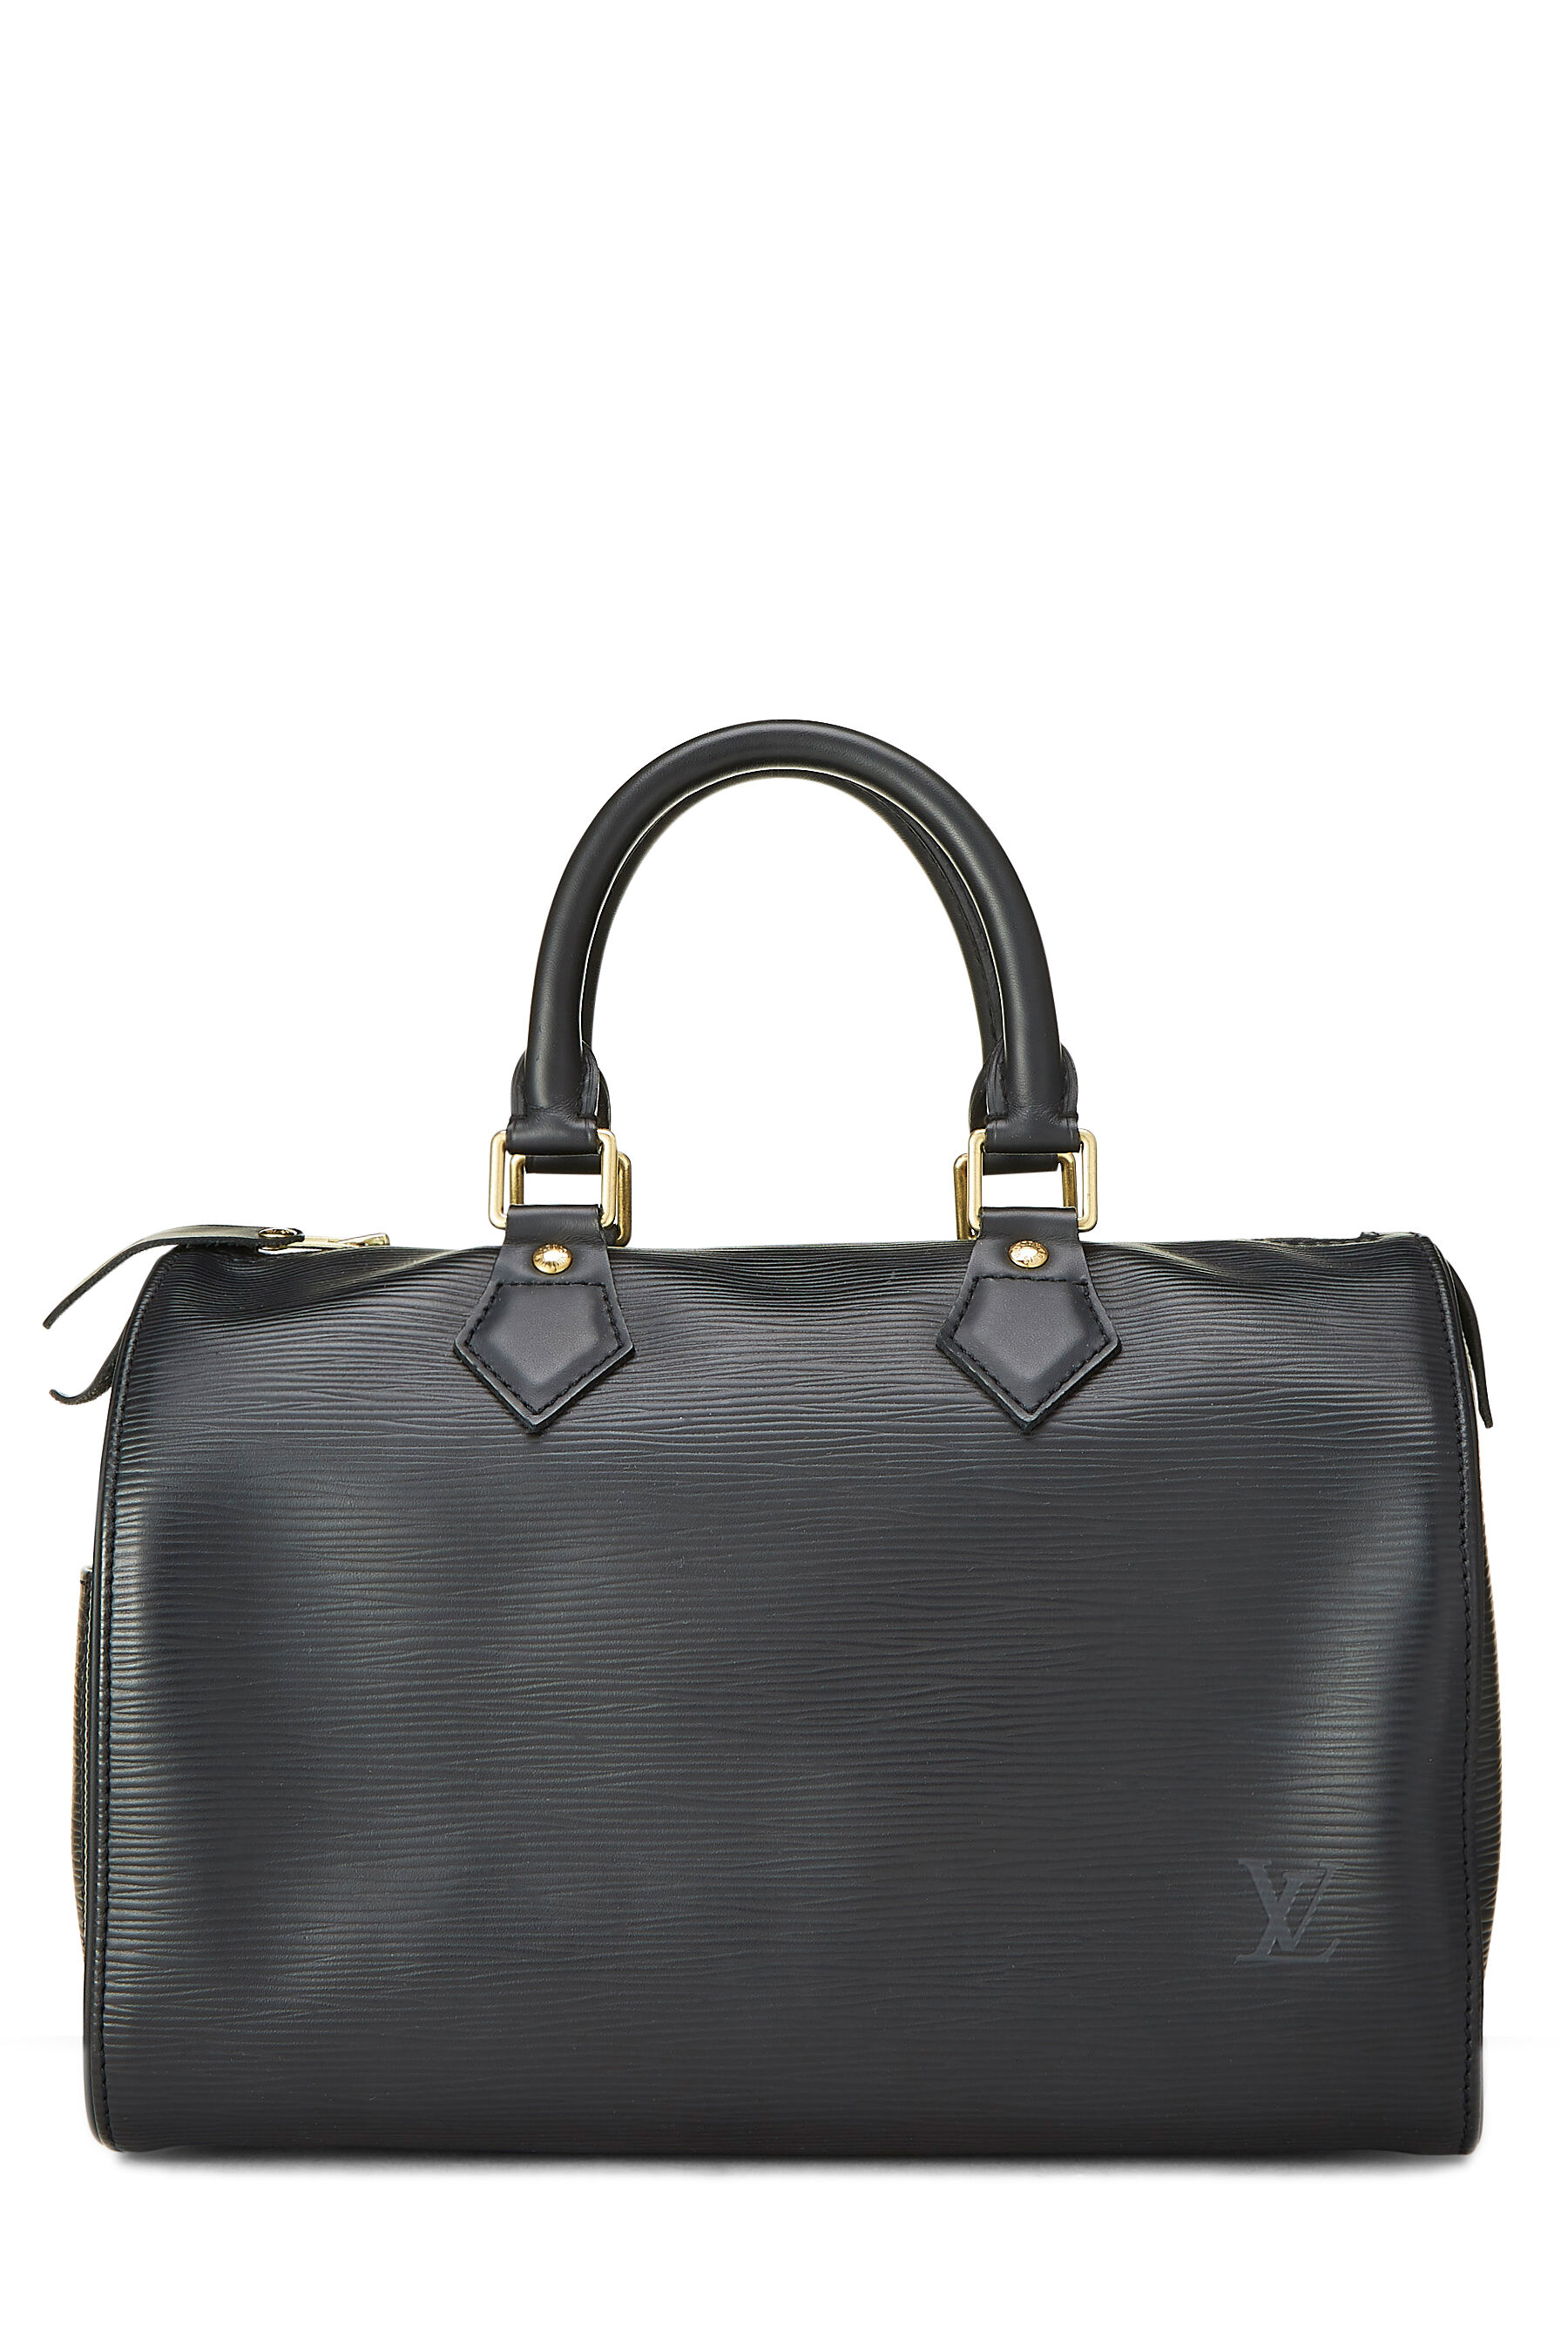 Louis Vuitton Black Epi Speedy 25 Bag Louis Vuitton